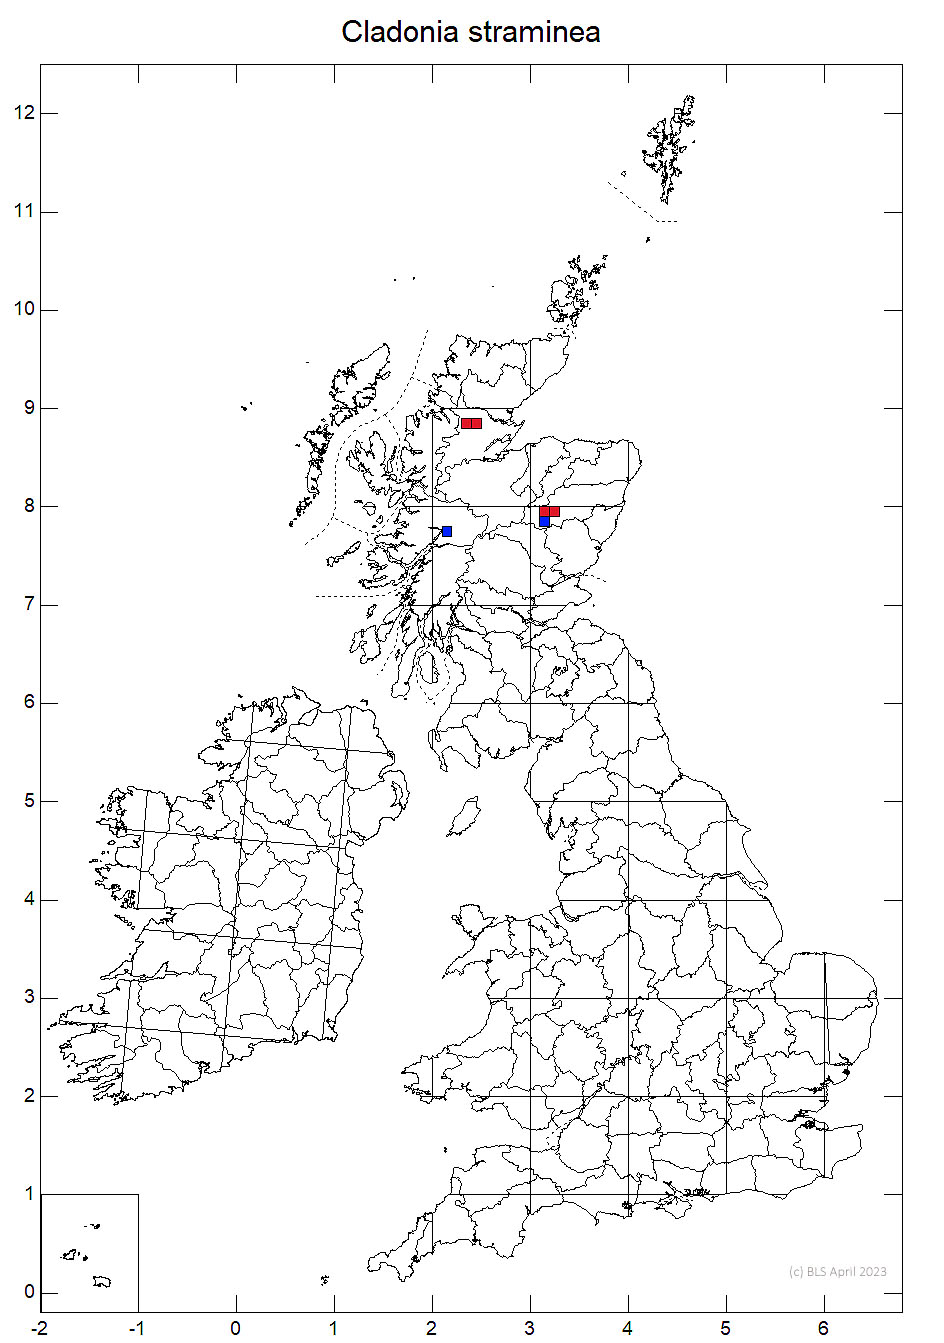 Cladonia straminea 10km sq distribution map